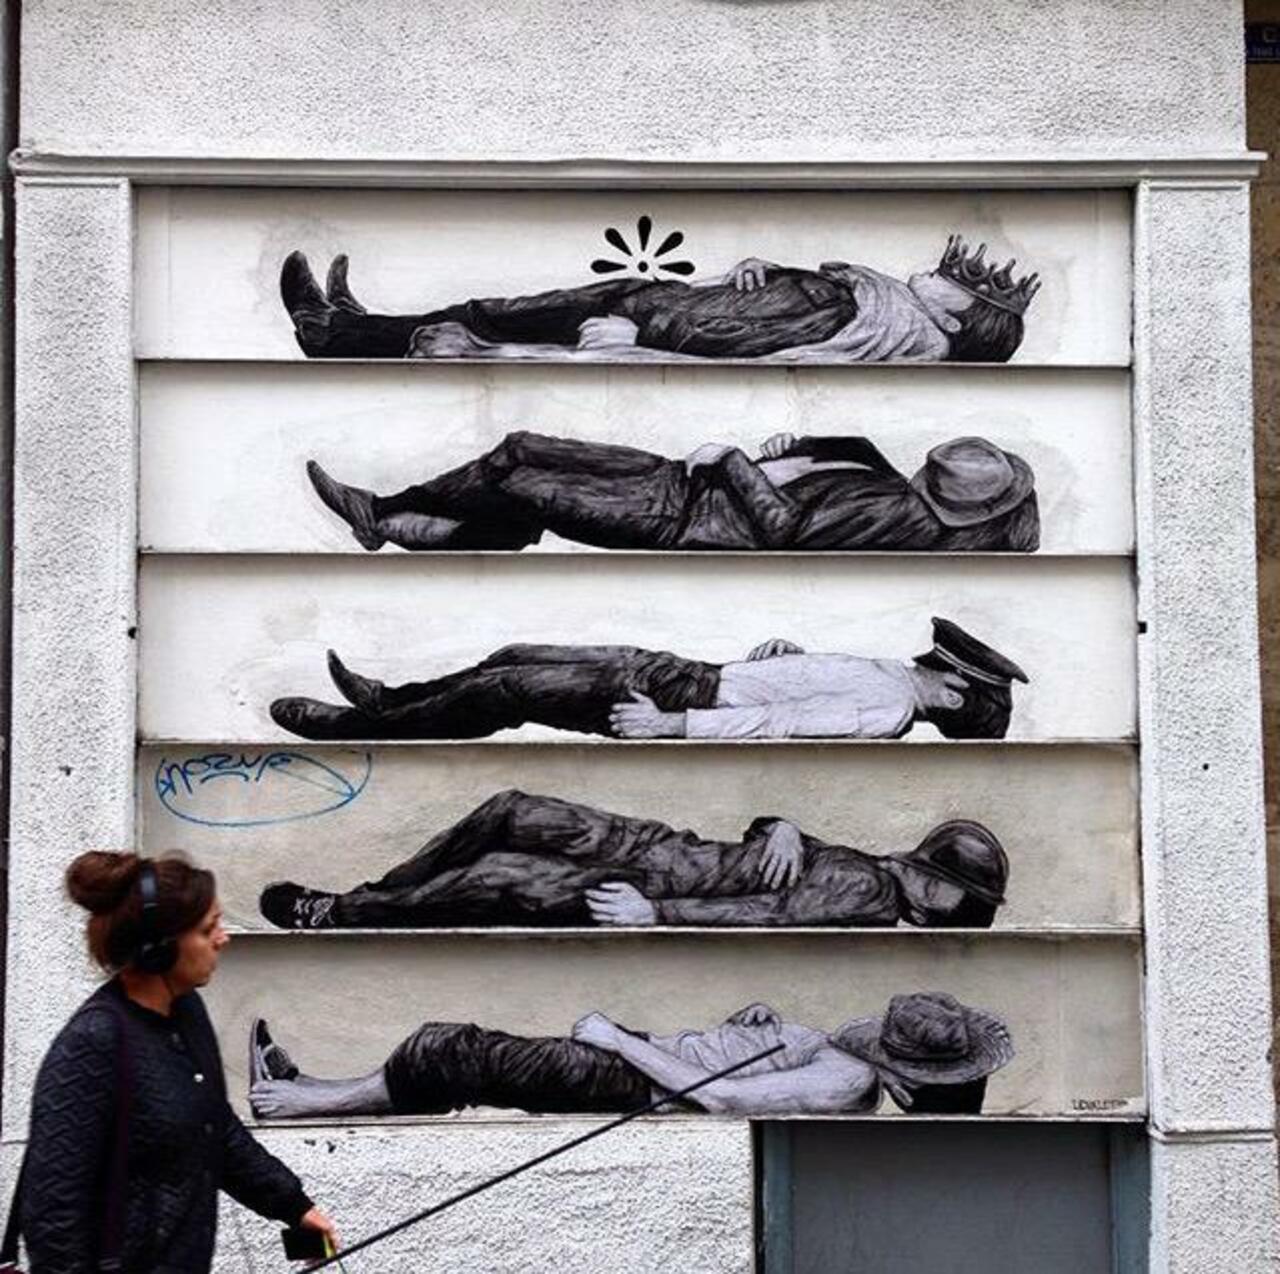 New Street Art by Levalet 
L'ordre des choses - Paris XIX

#art #mural #graffiti #streetart http://t.co/8qwNBe691A